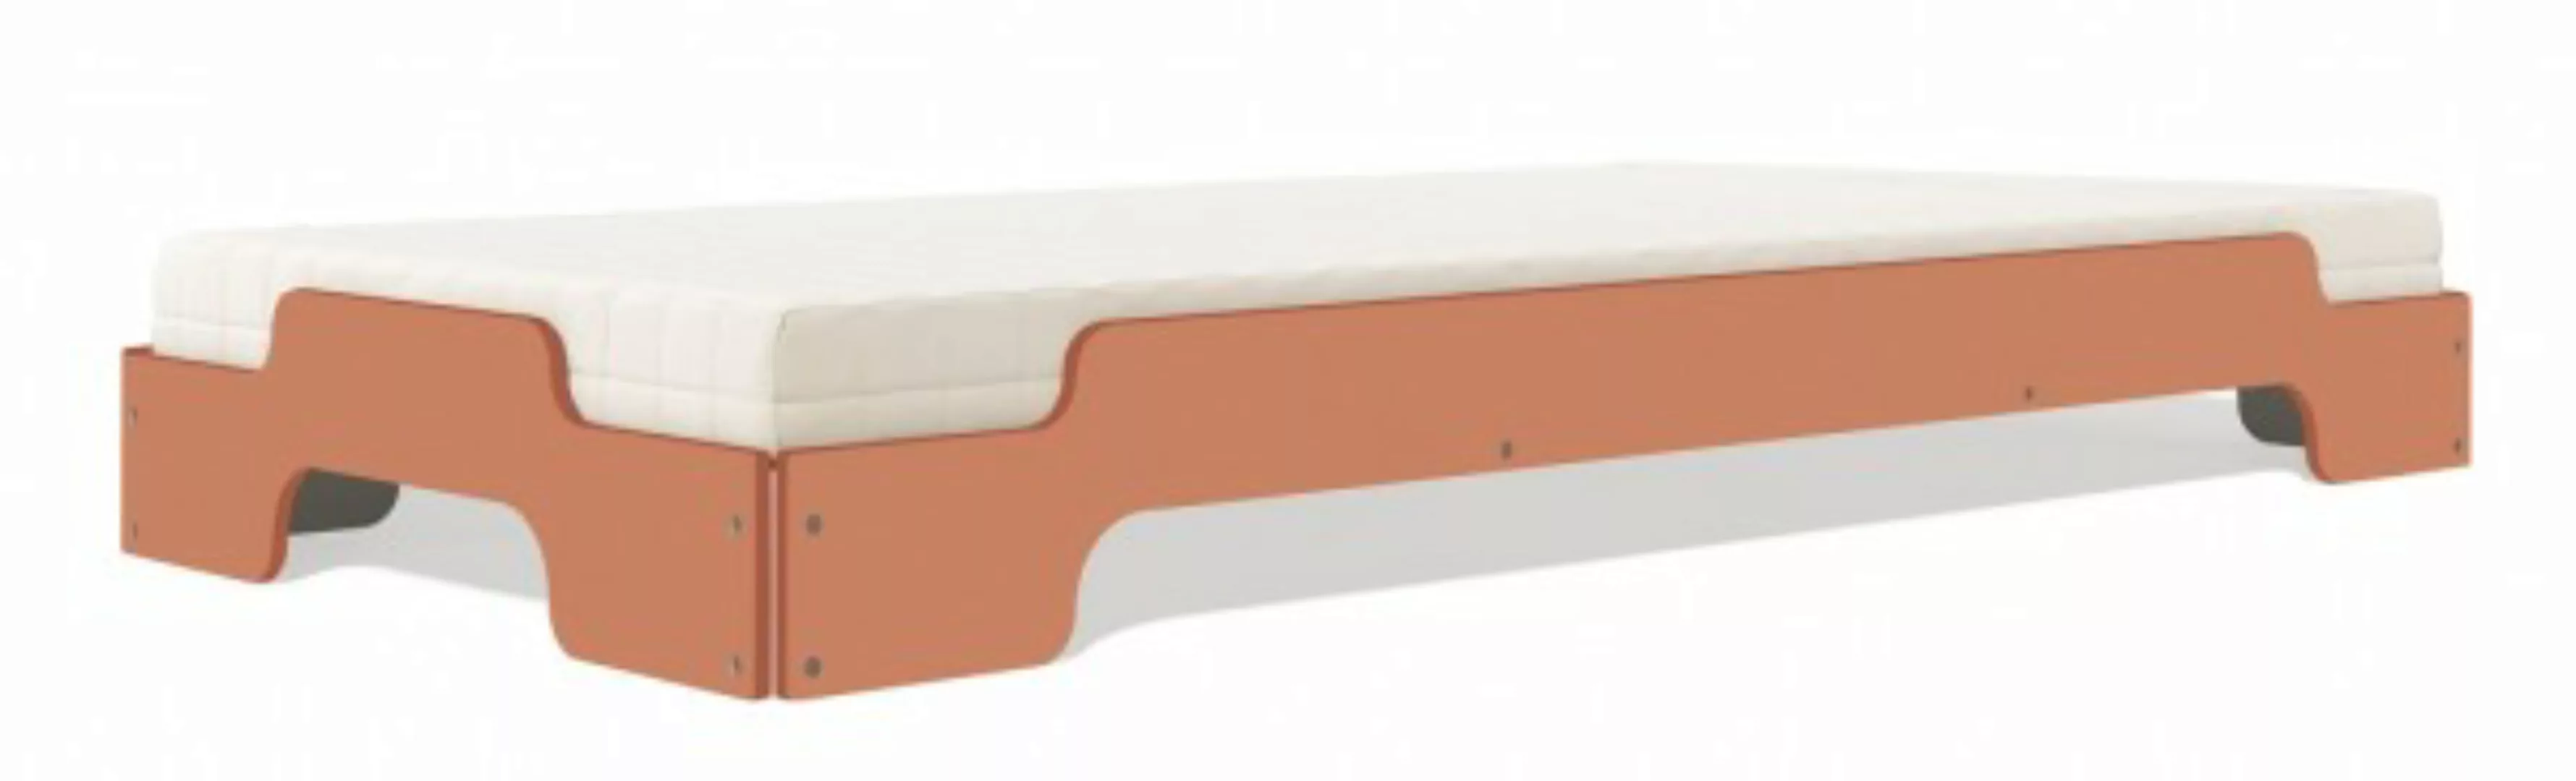 Stapelliege KLASSIK - Farbig apricotbraun RAL 050 60 40 90 x 200 cm günstig online kaufen